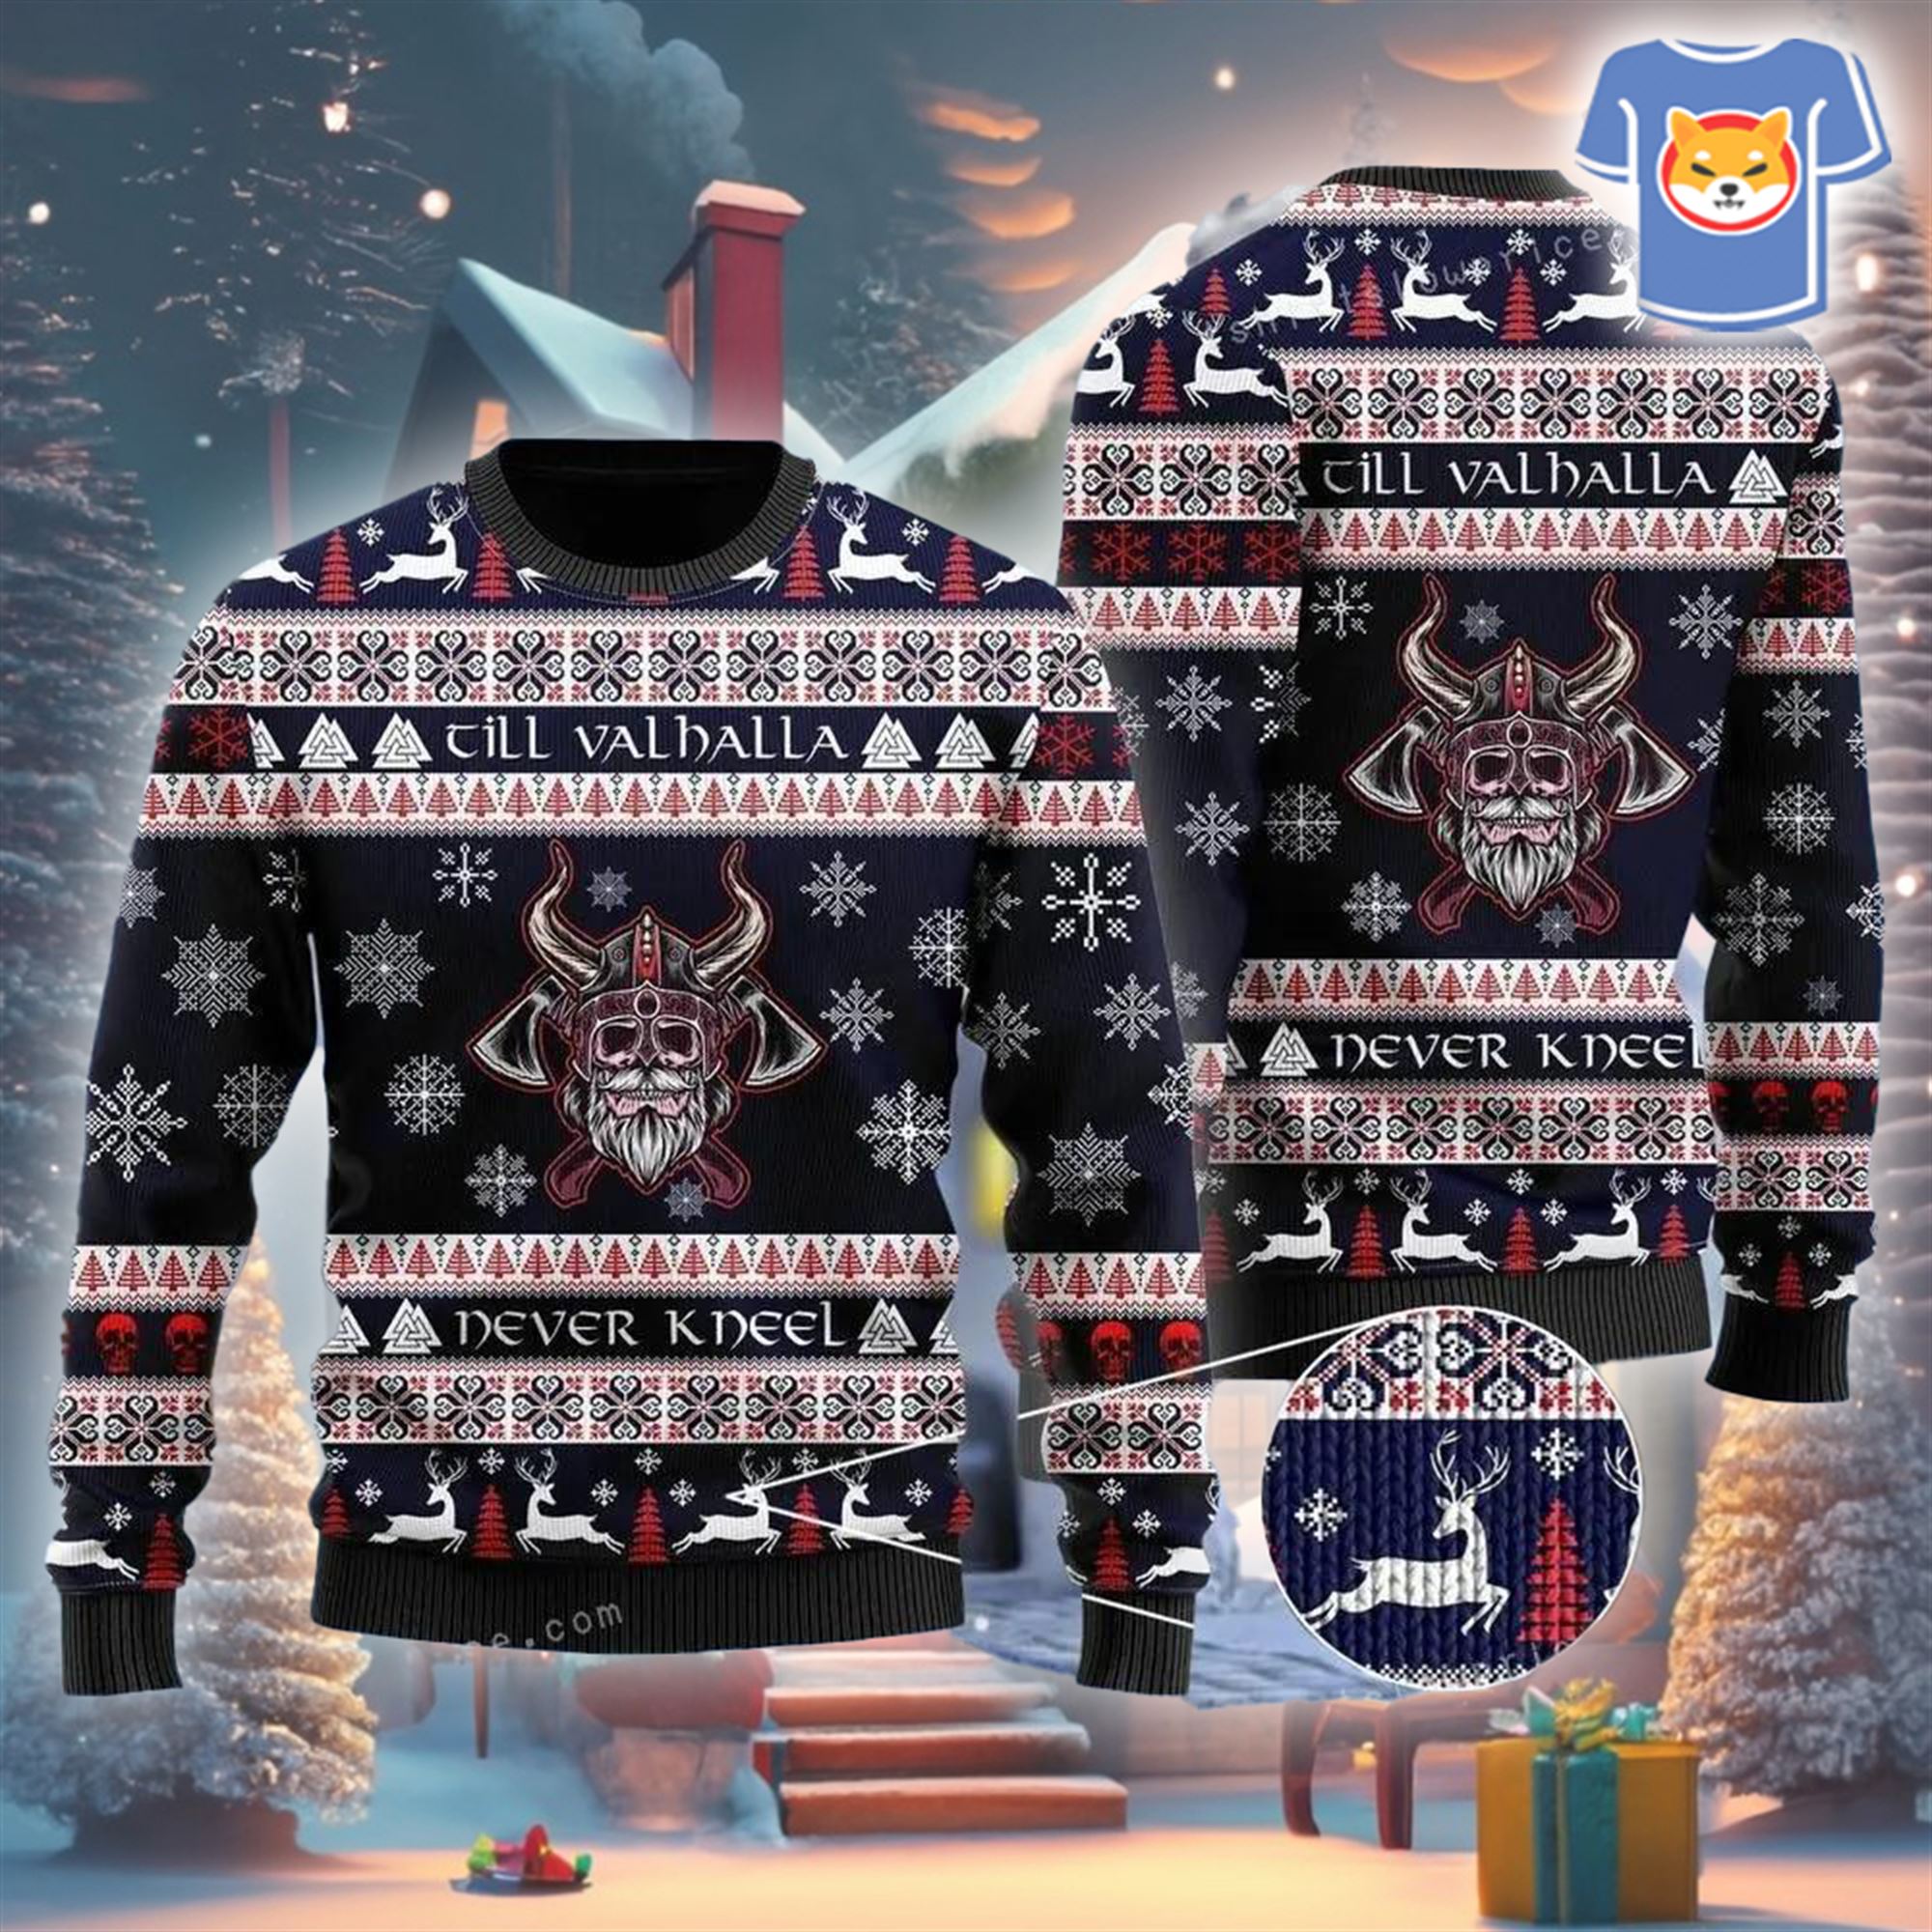 Viking Ugly Sweater 